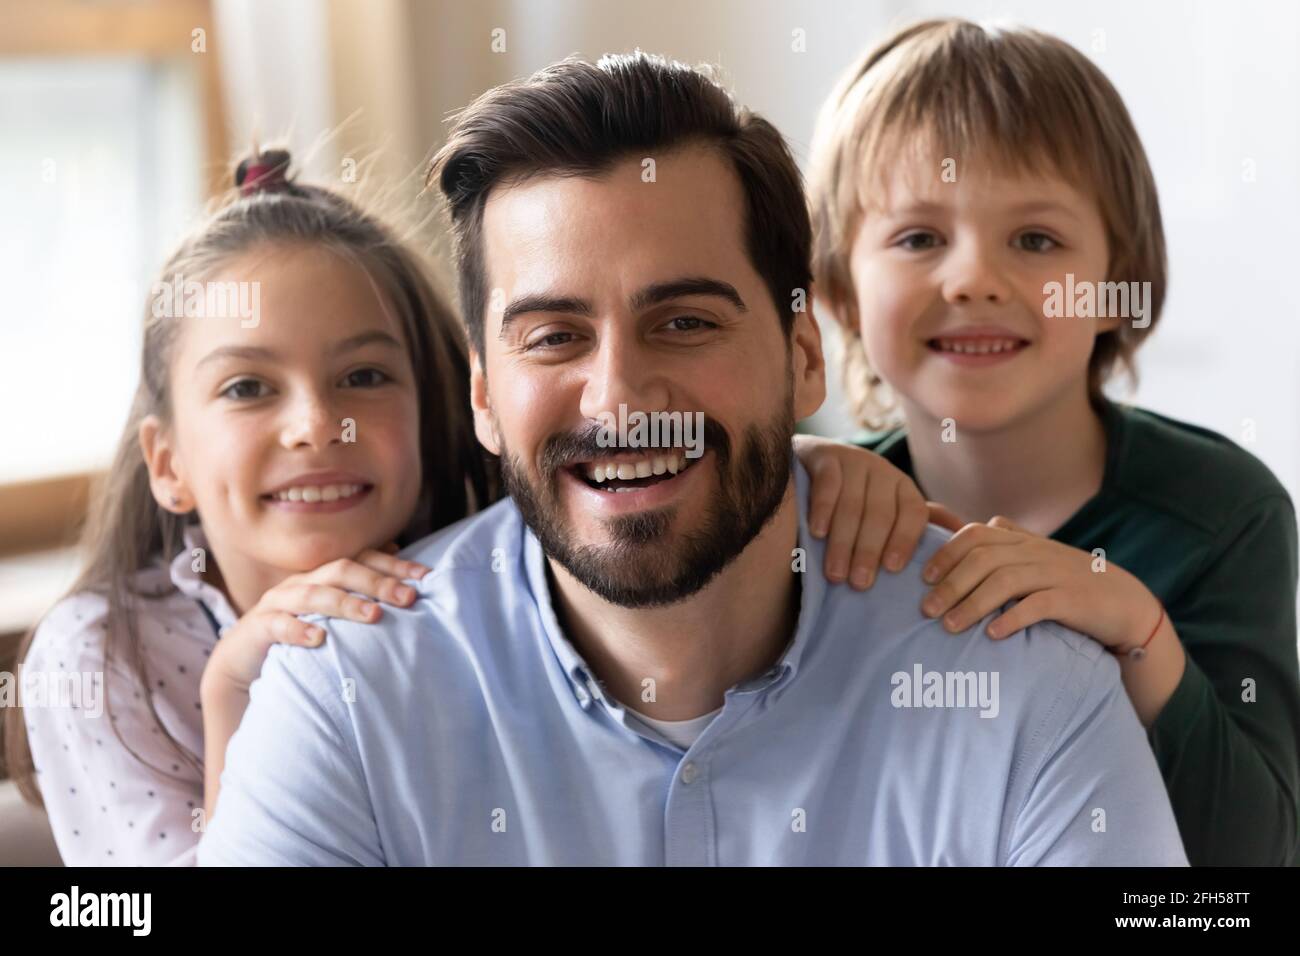 Headshot portrait of happy dad and kids hugging Stock Photo